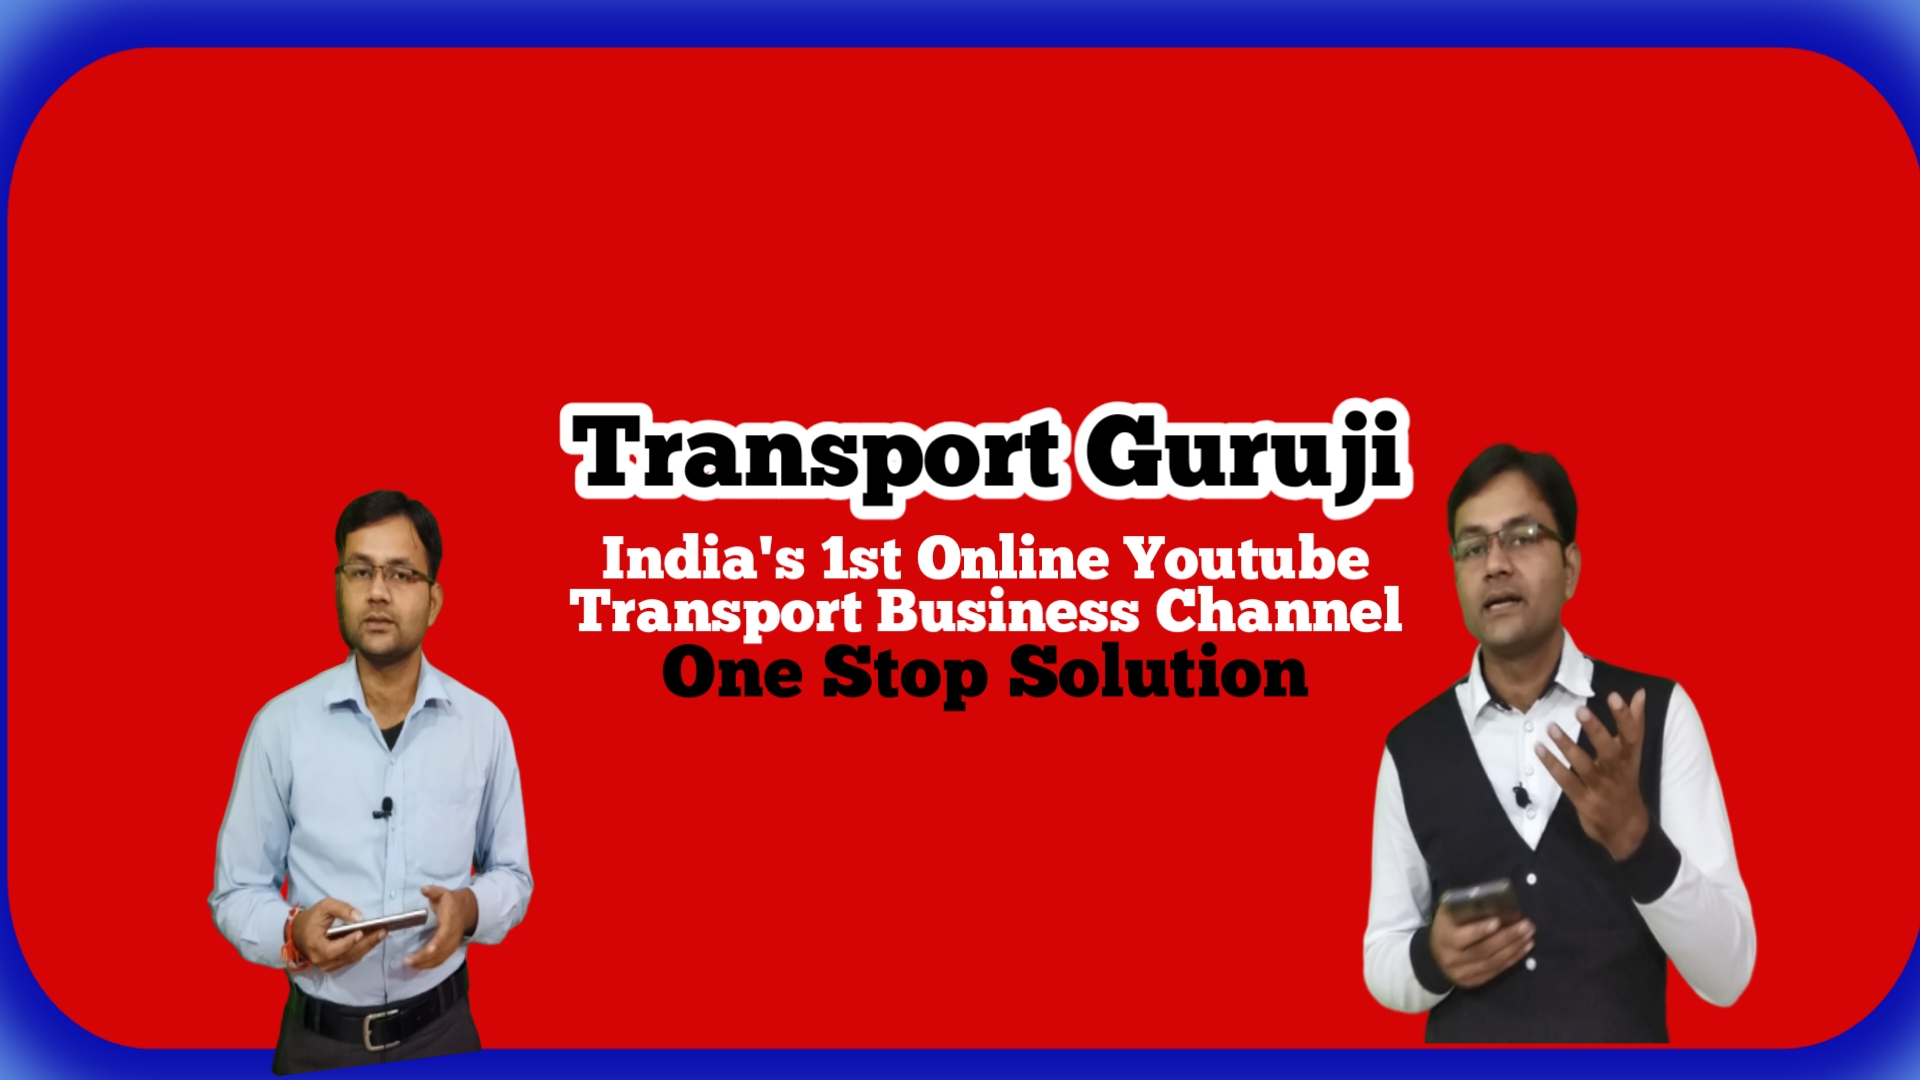 Transport Guruji